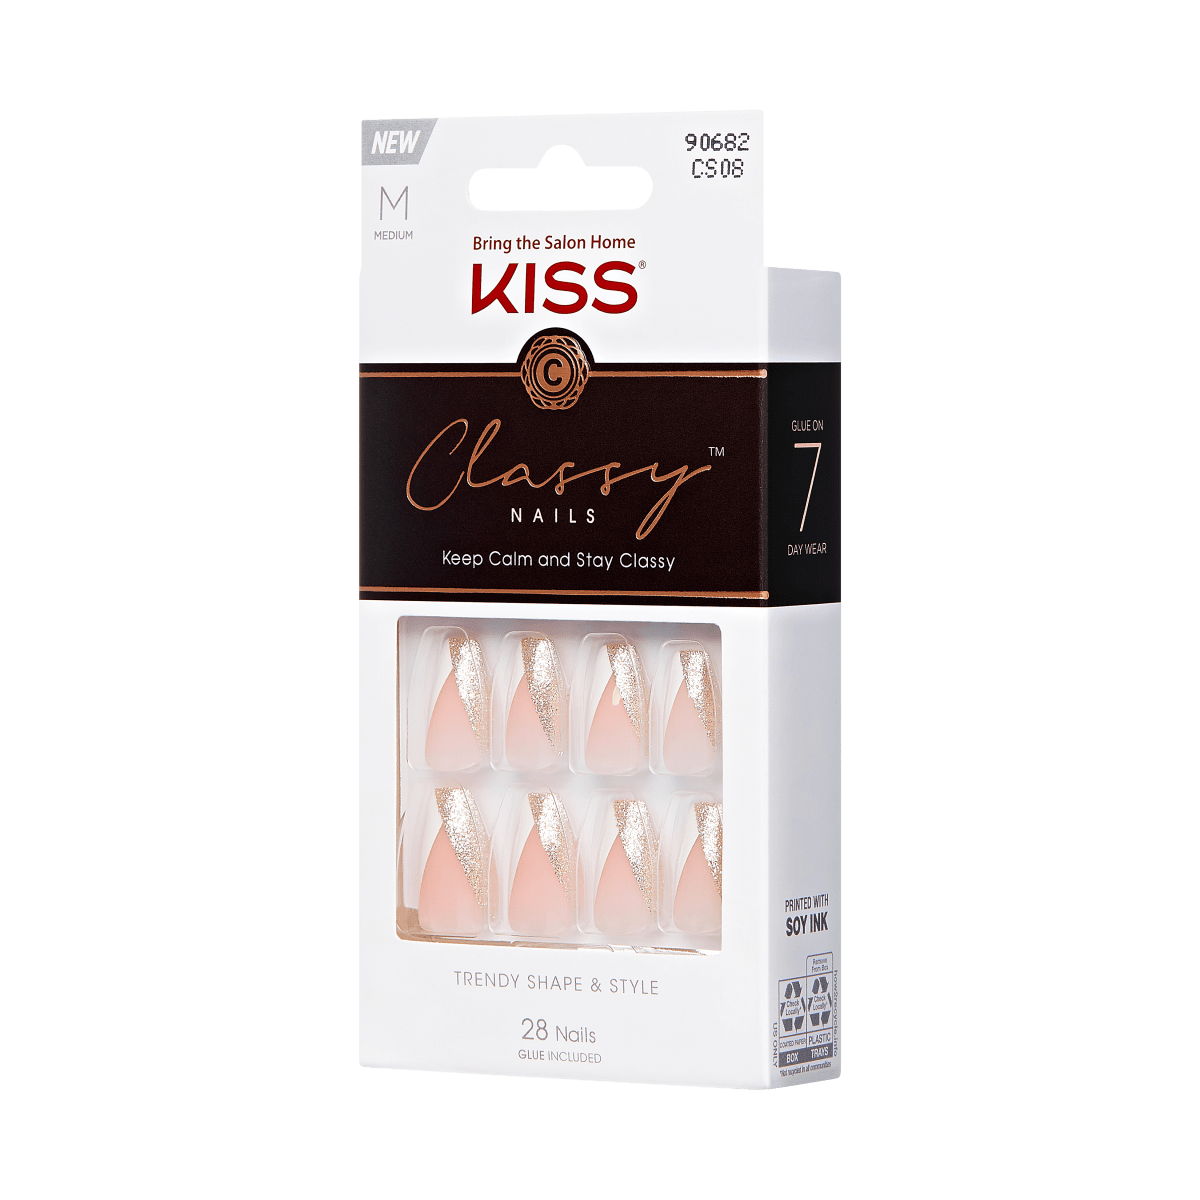 Kiss Classy Nails - The Boss (CS08)